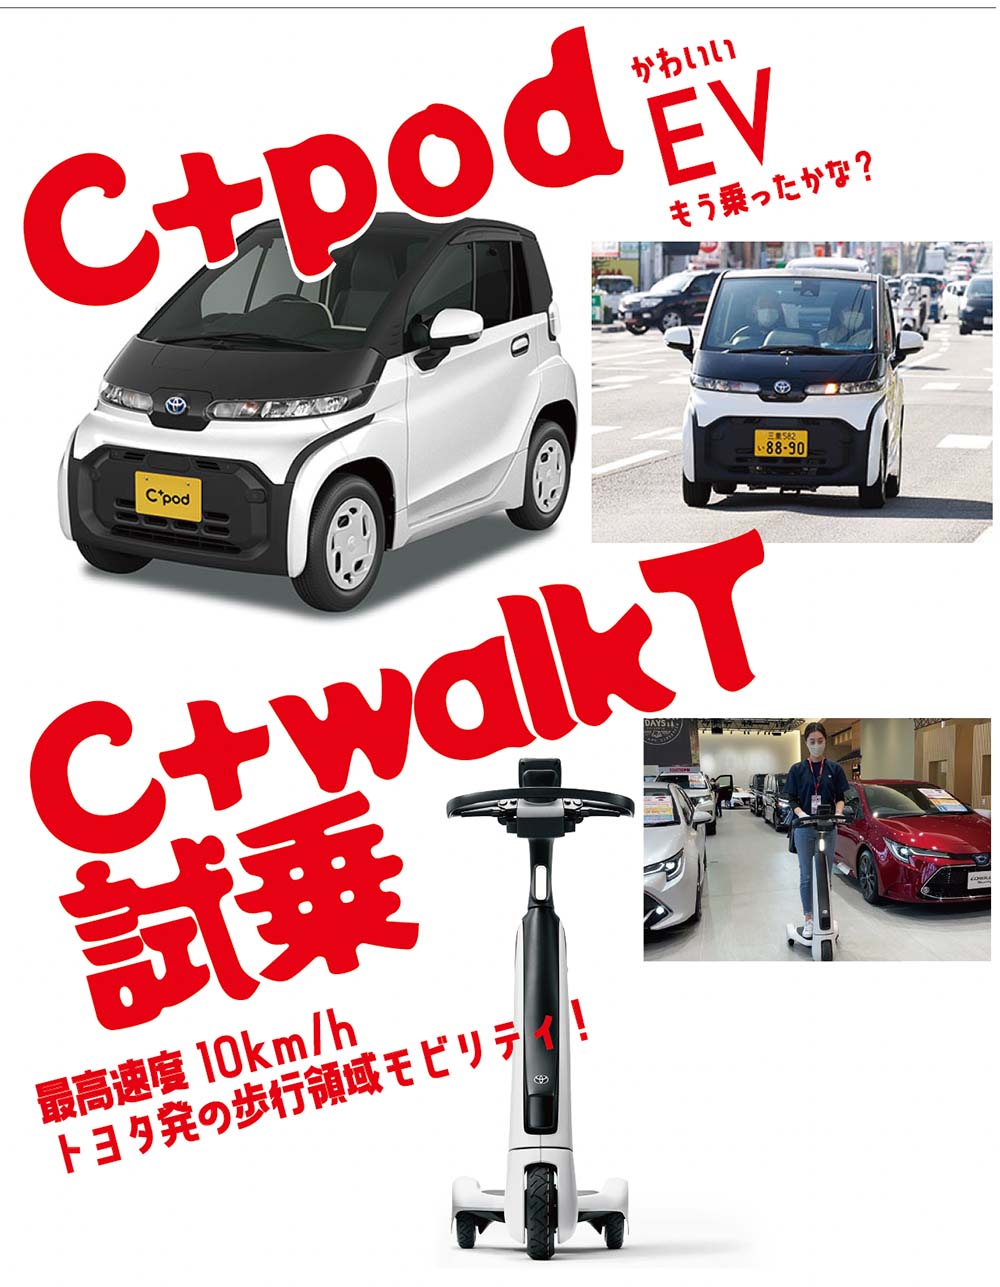 C+walk T 試乗 C+pod